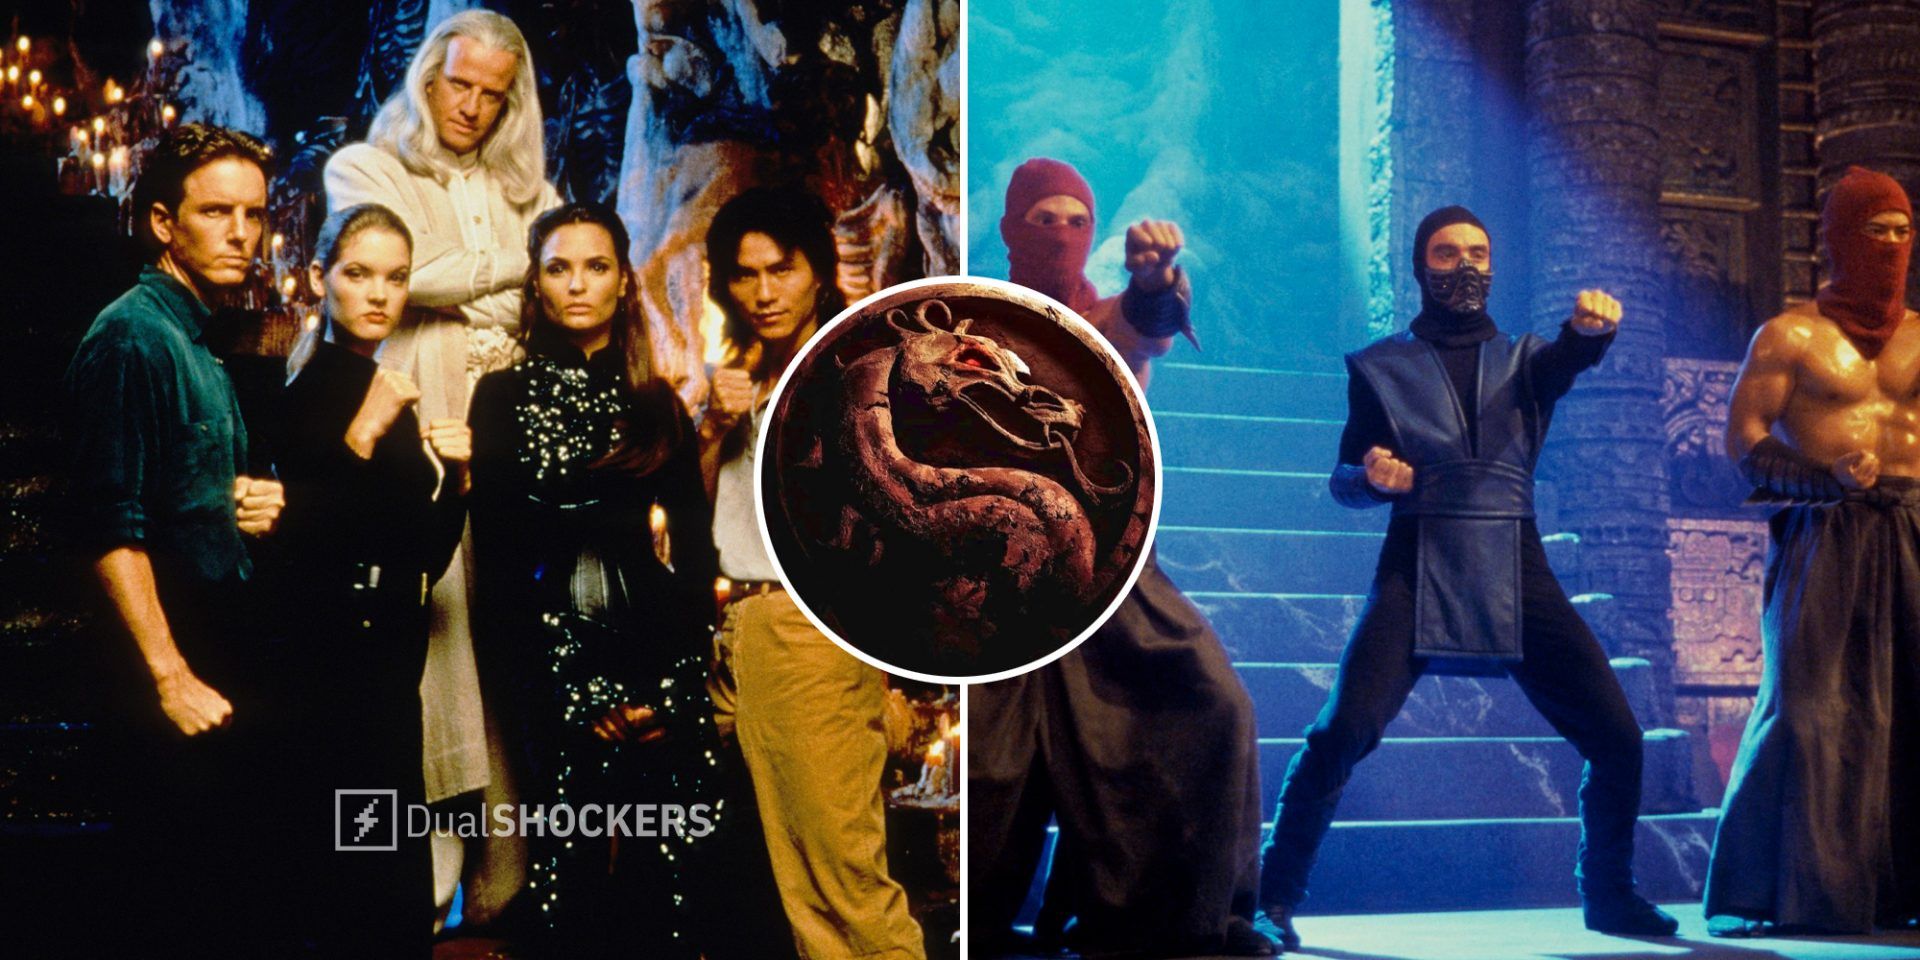 Mortal Kombat 1995 cast photo on left, Mortal Kombat logo in middle, Sub-Zero punching on right